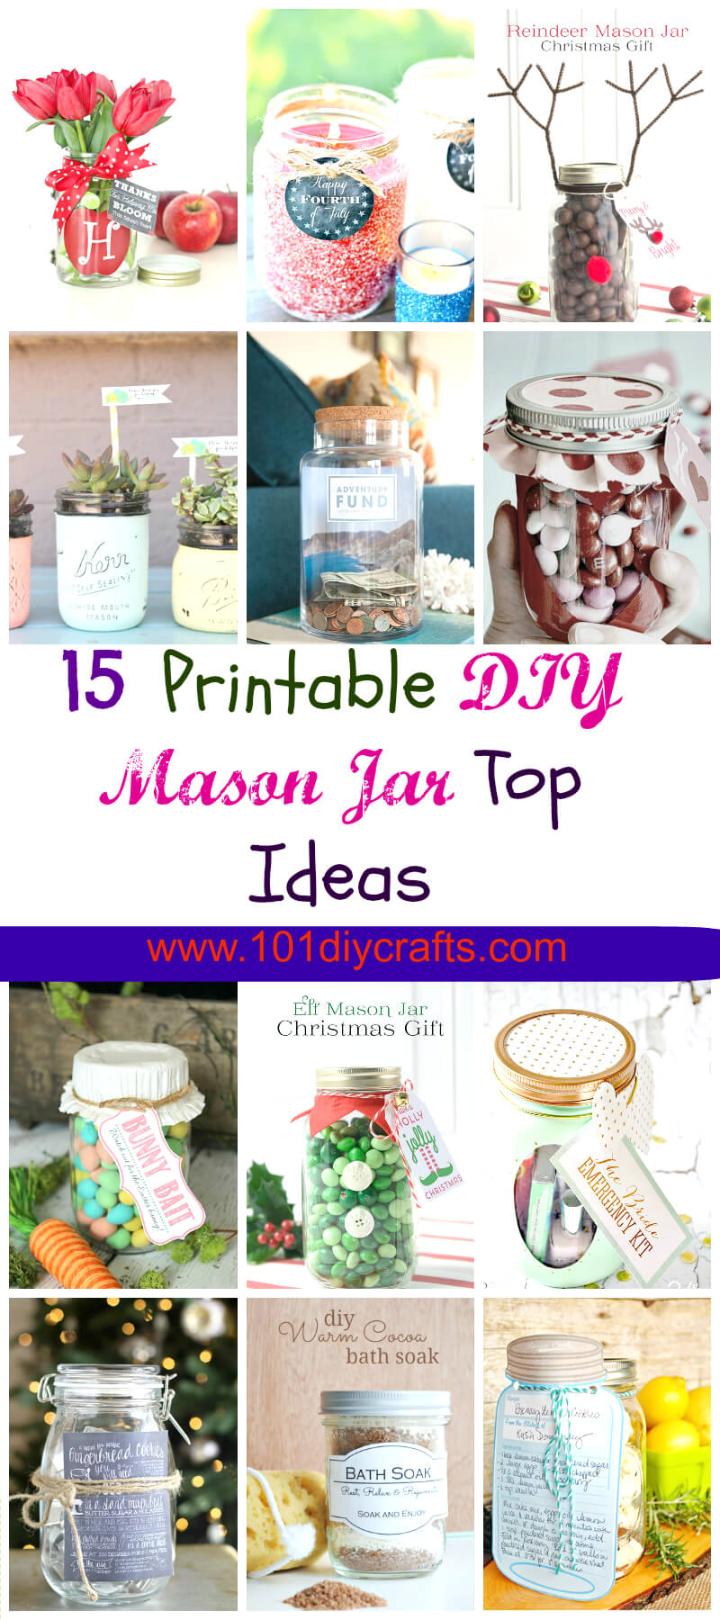 15 DIY Printable Mason Jar Top Ideas